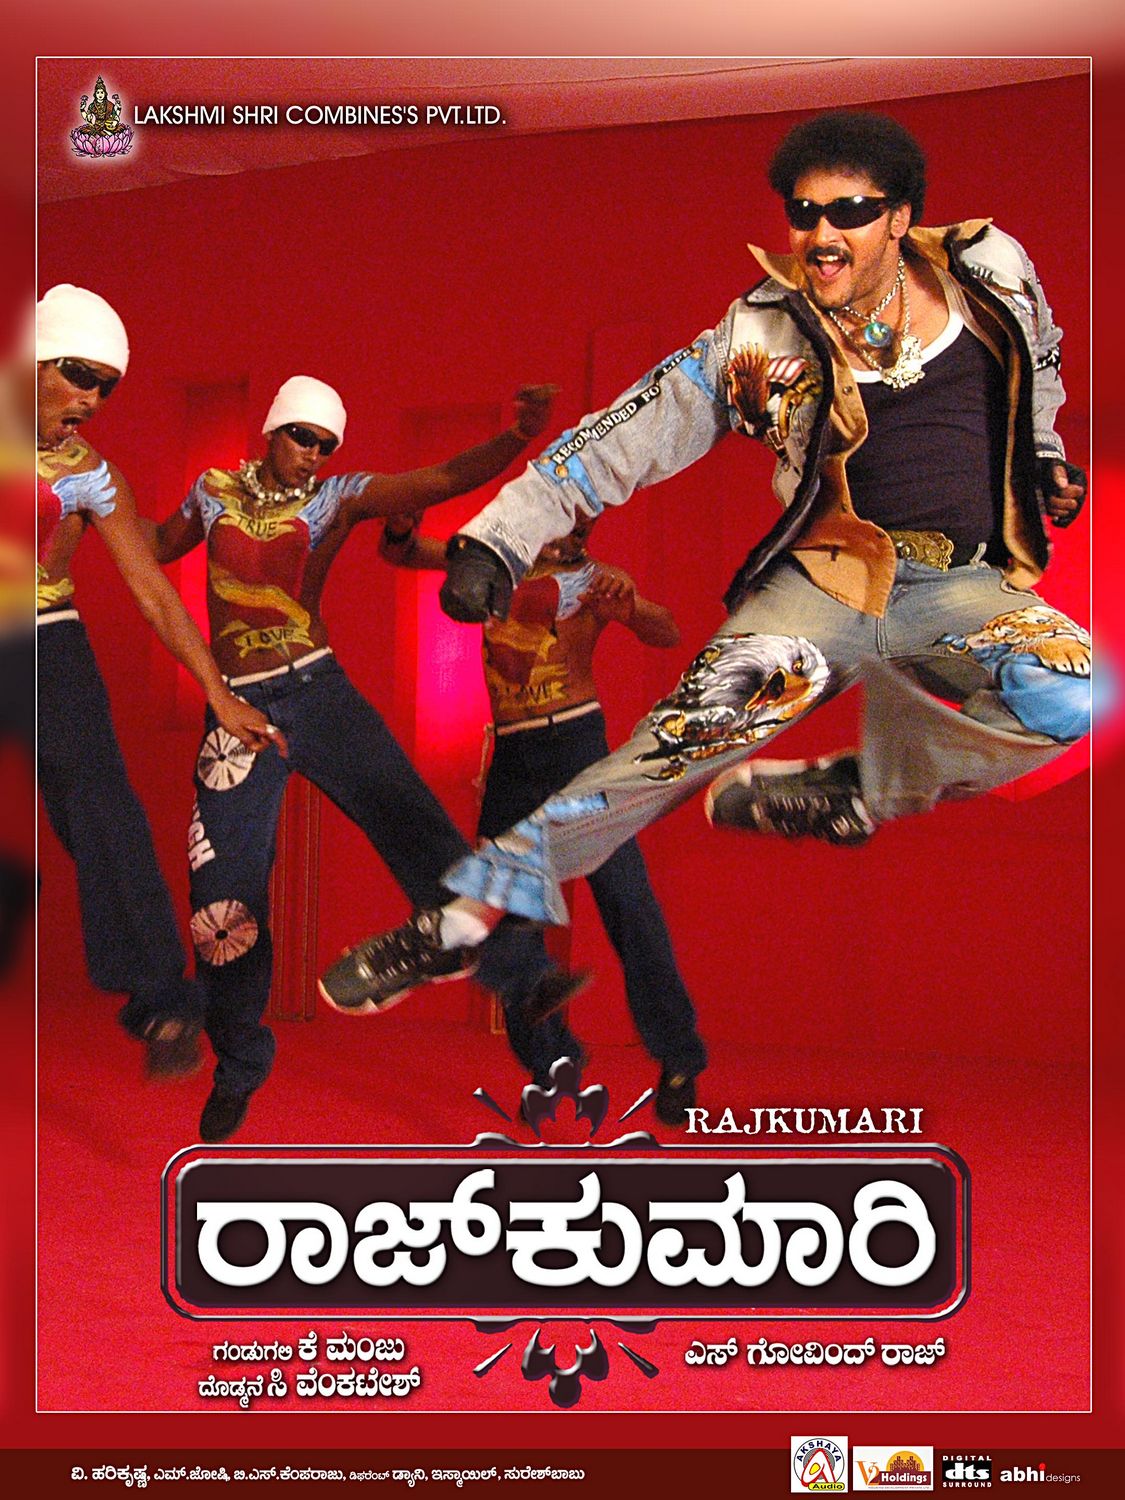 Extra Large Movie Poster Image for Rajkumari (#15 of 20)